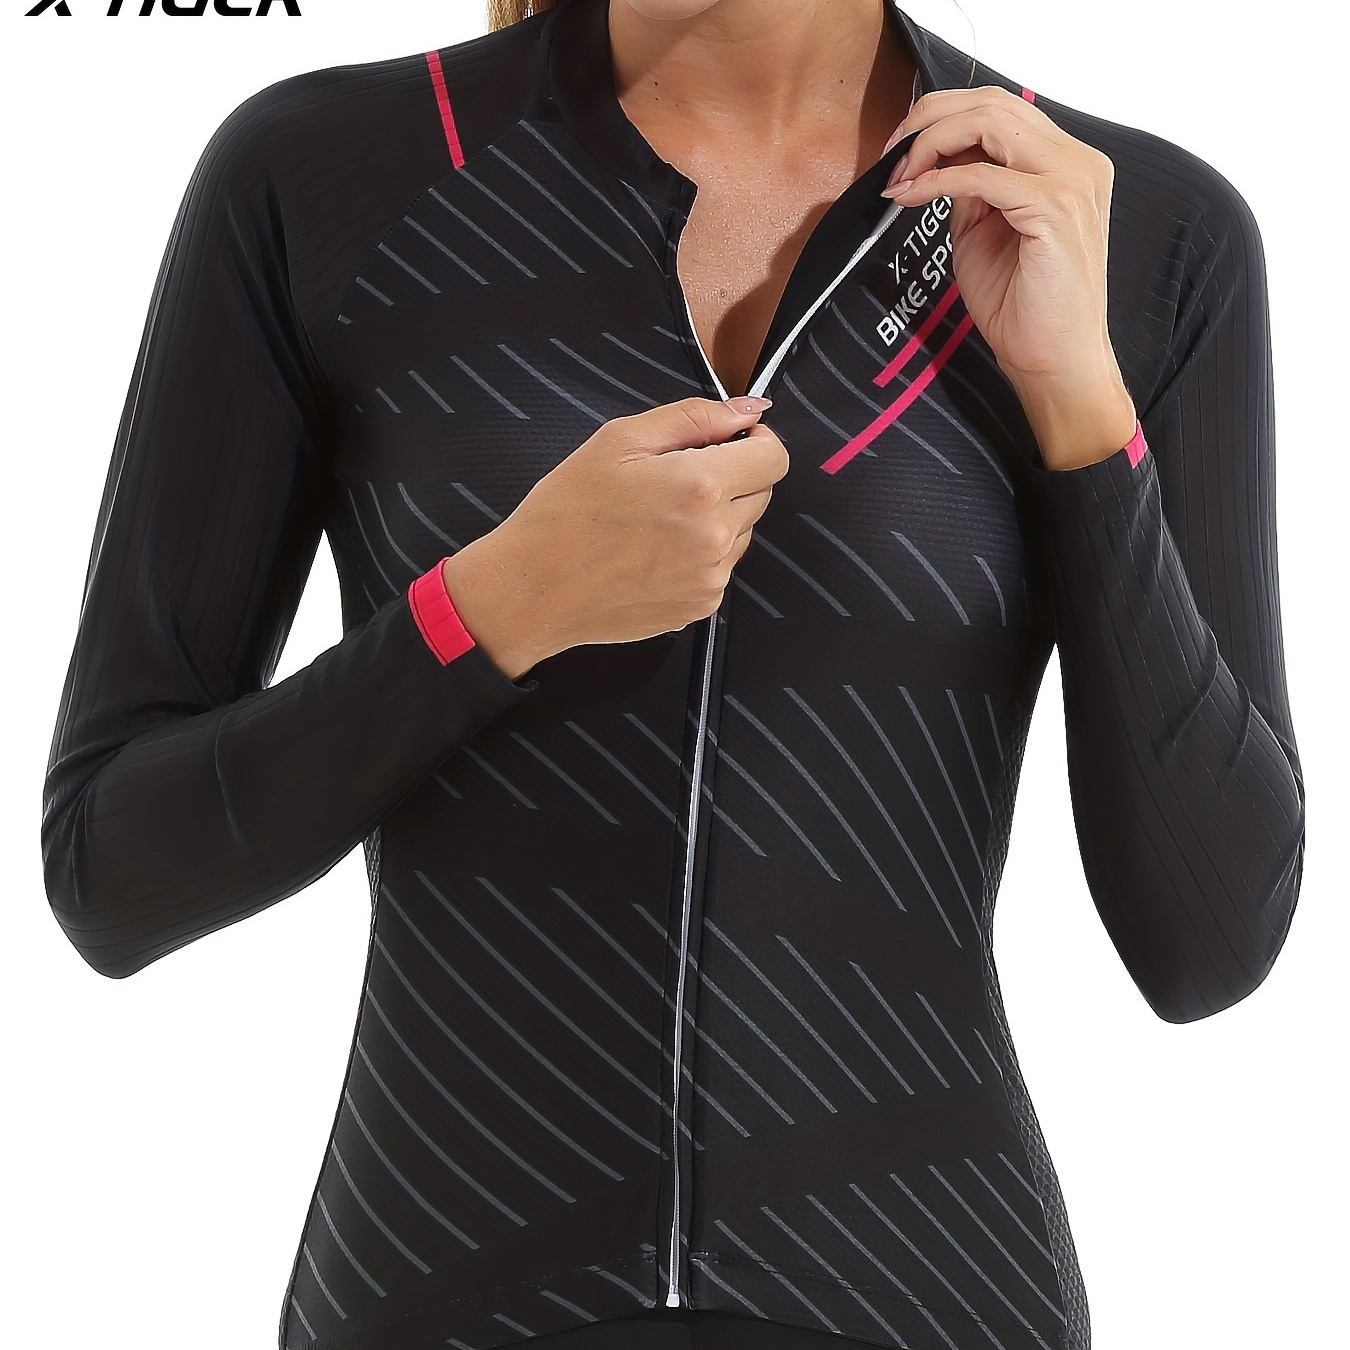 

X-tiger Women's Long Sleeve Cycling Jersey - Quick Dry Bike Sportswear For Pro Mountain Biking